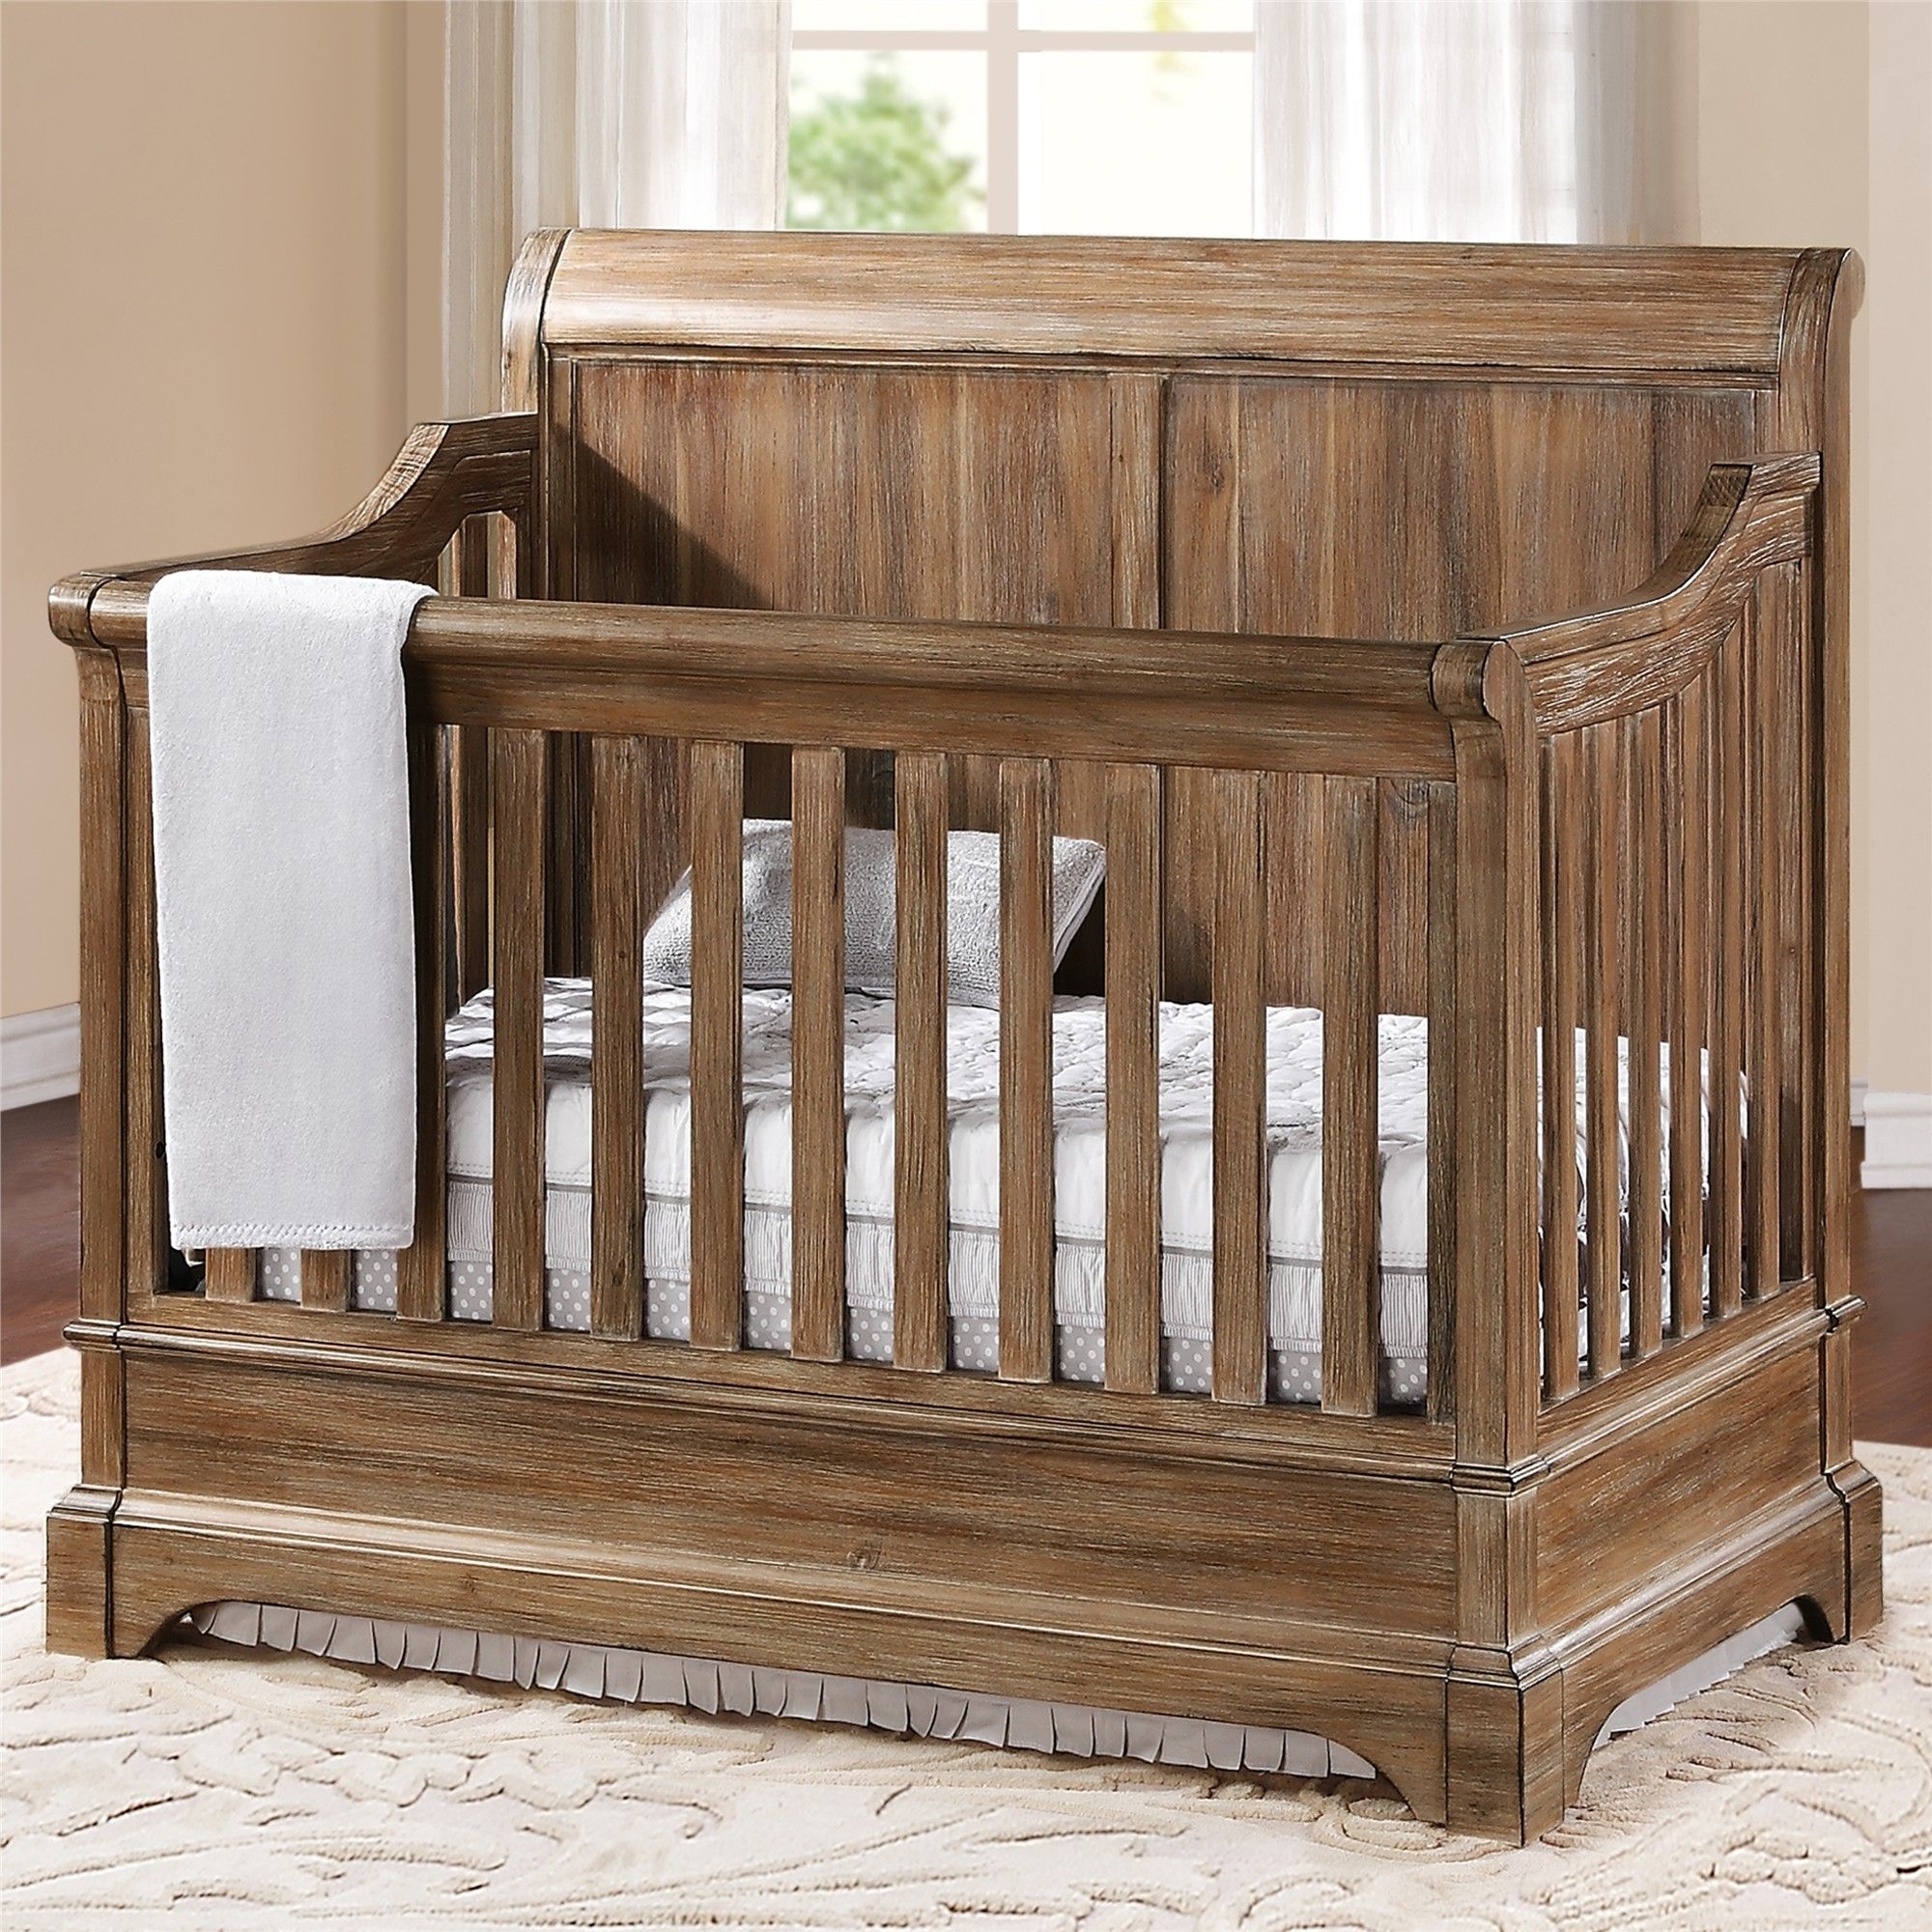 hardwood crib